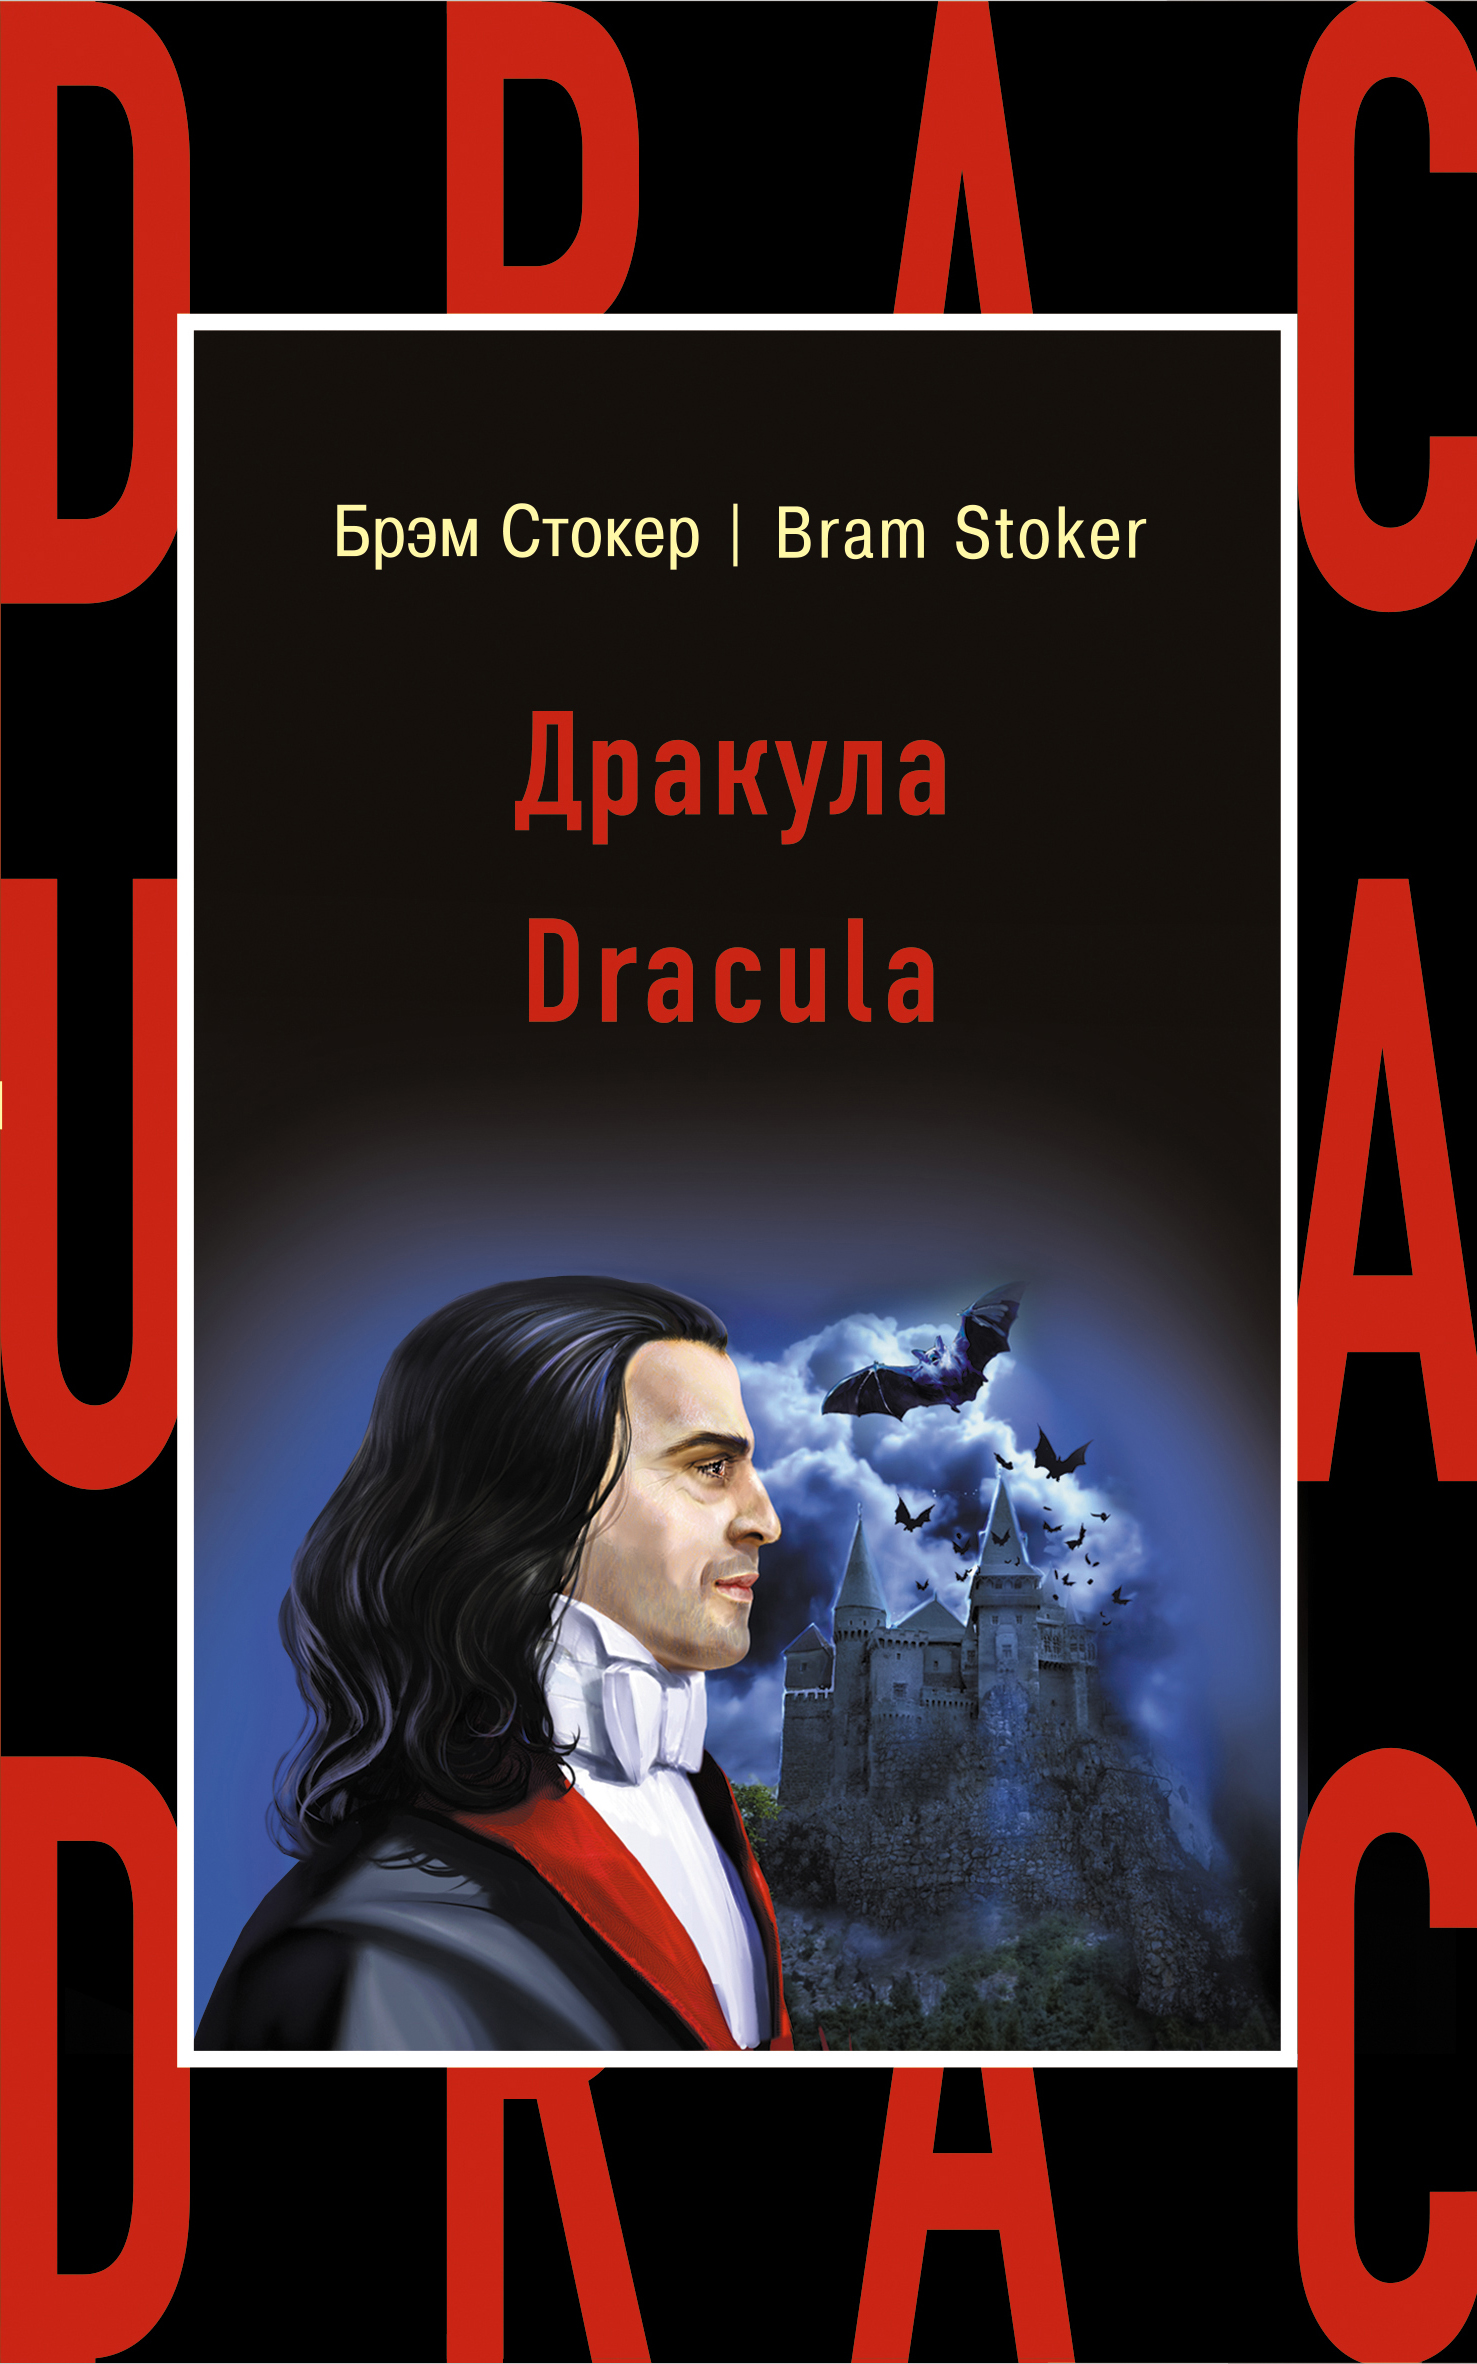  = Dracula